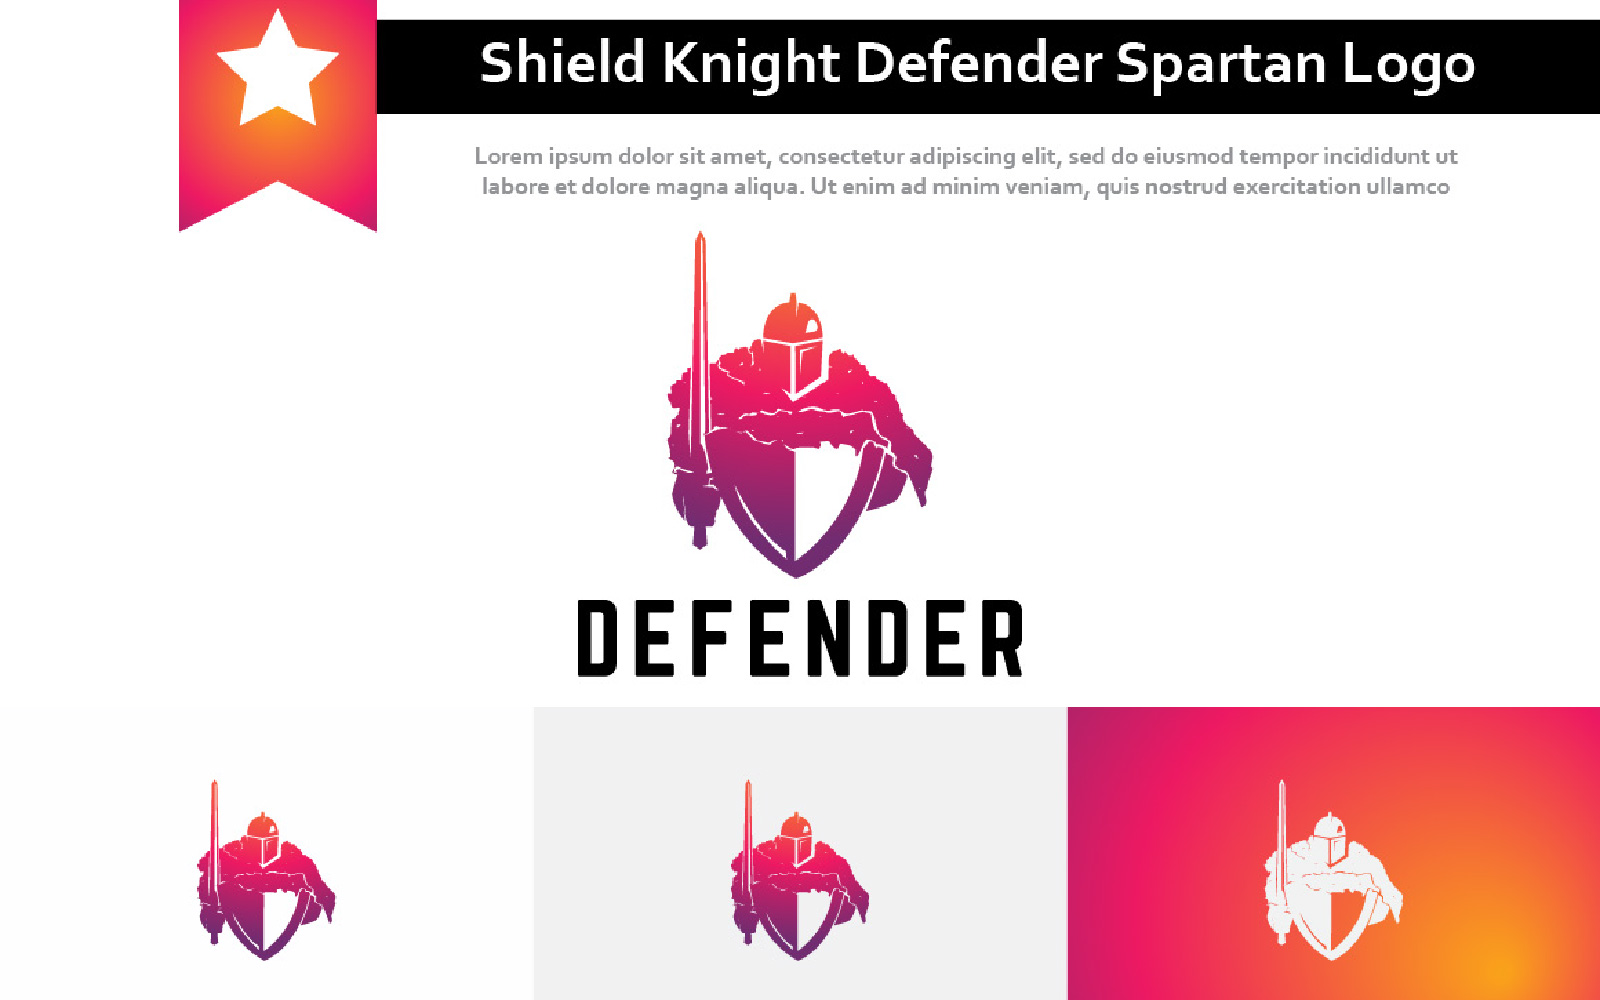 Shield Sword Knight Defender Spartan Soldier Warrior Mascot Logo